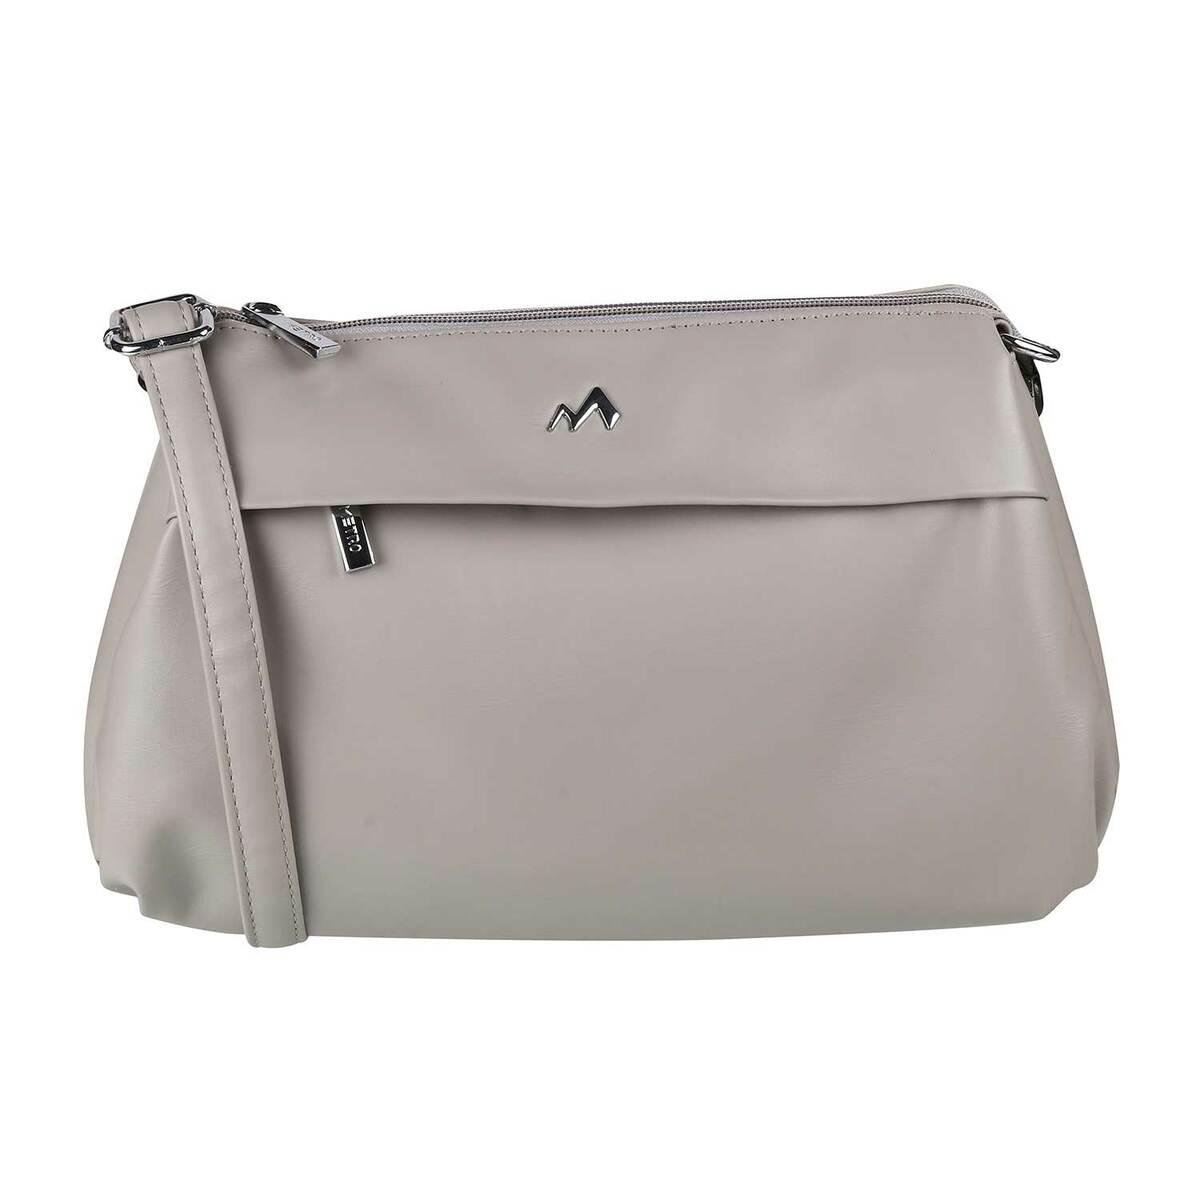 Buy Women Grey Shoulder Bag Online | SKU: 66-7262-14-10-Metro Shoes